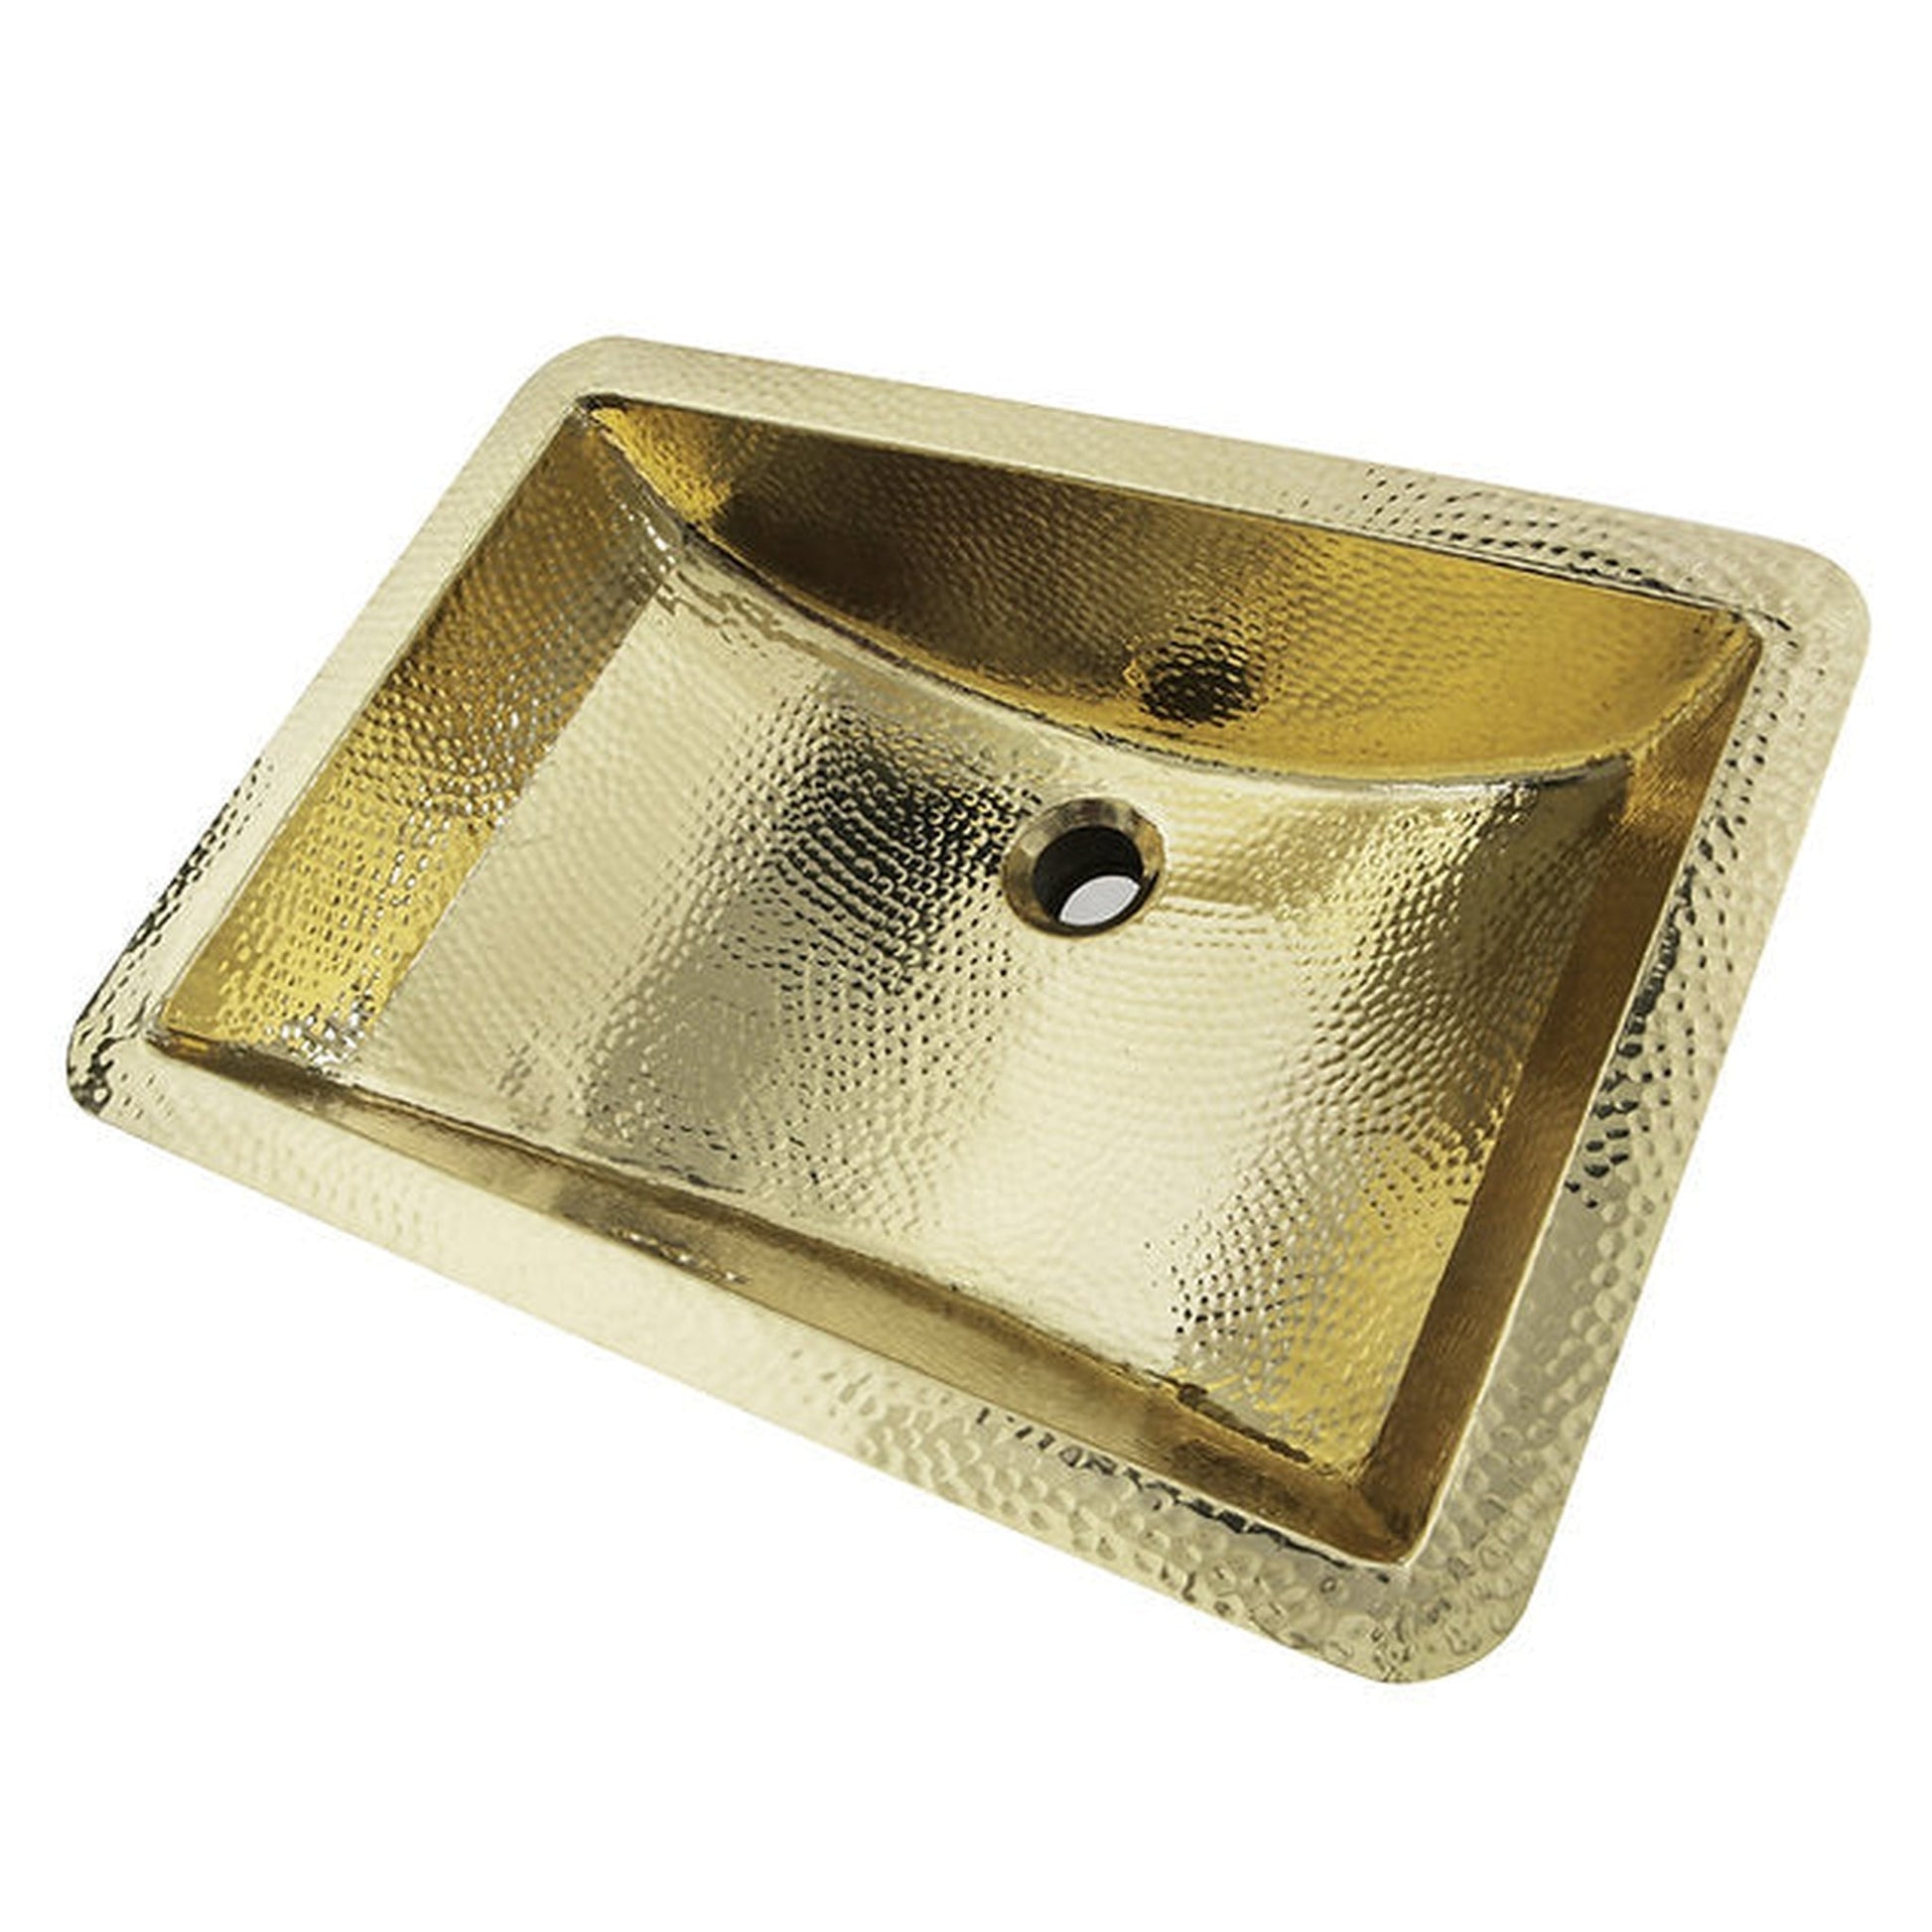 Nantucket Sinks Brightwork Home 21" W x 15" D" Rectangular Hand Hammered Polished Brass Undermount Sink With Overflow